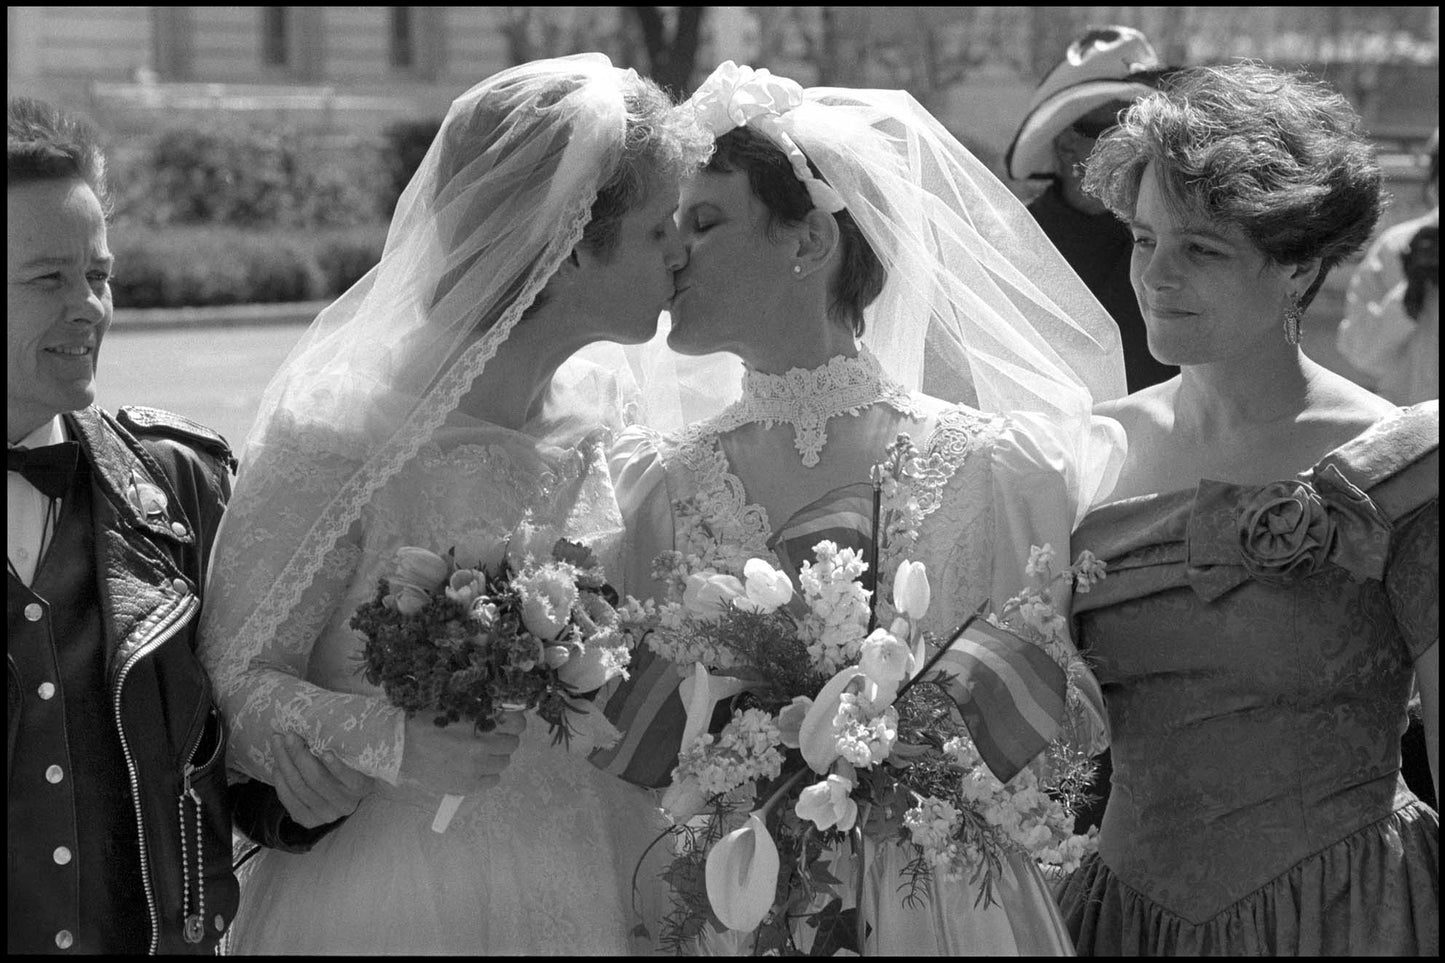 USA SF Gay wedding mars 96 - Ken Opprann